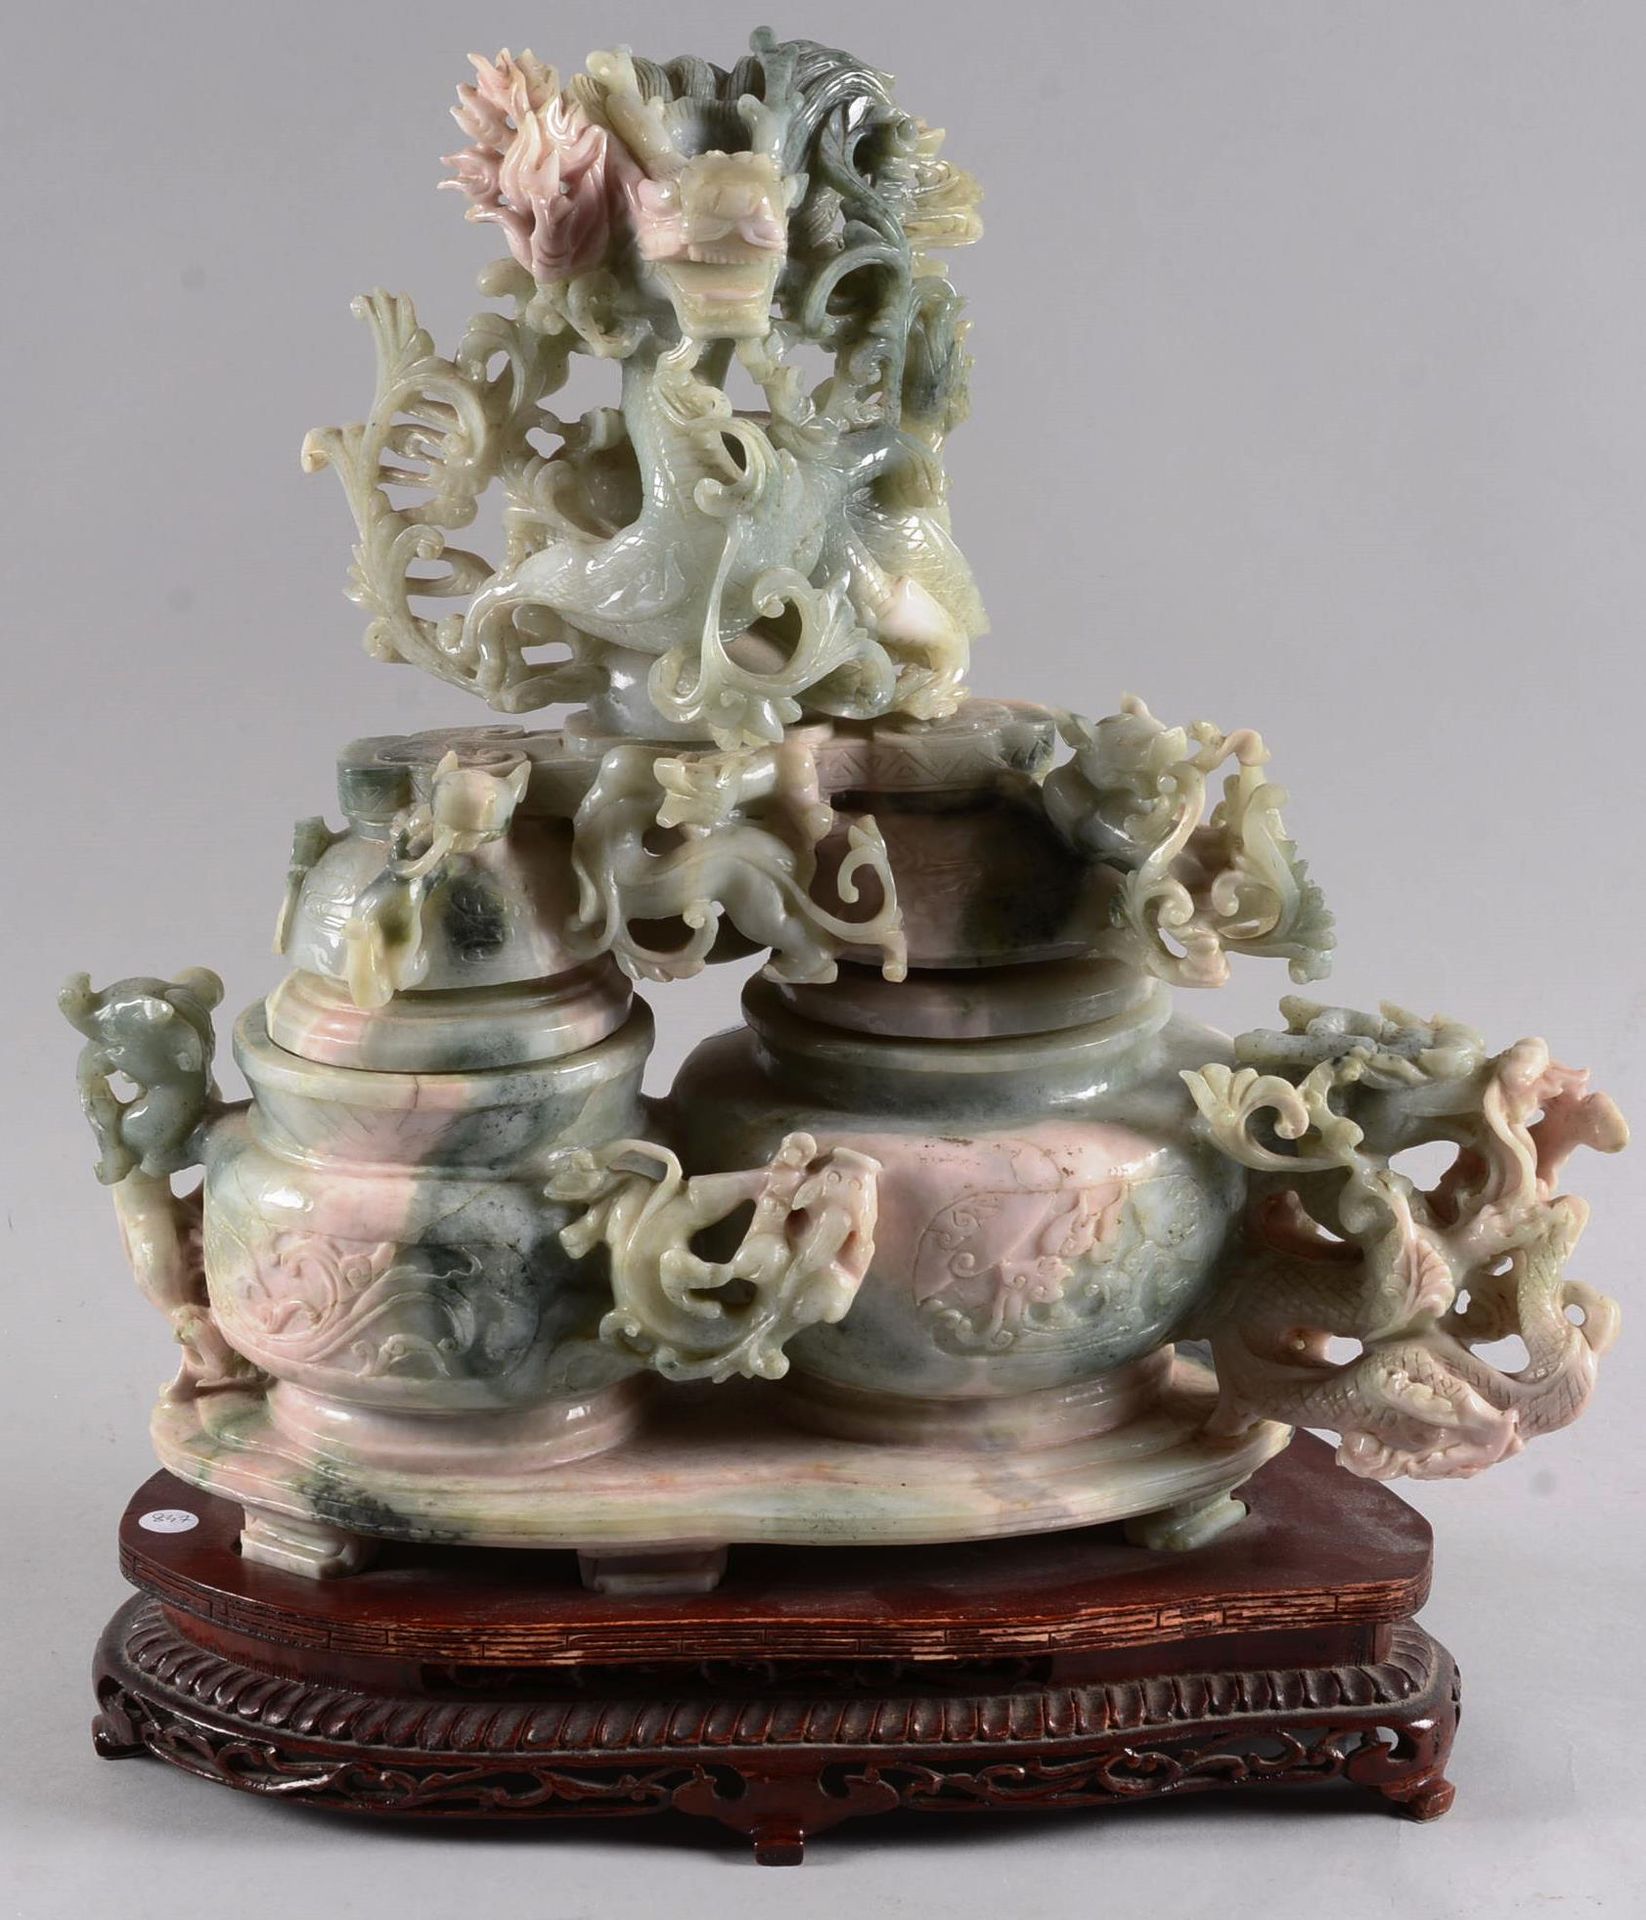 Belle et importante sculpture en jade CHINA.

Hermosa e importante escultura de &hellip;